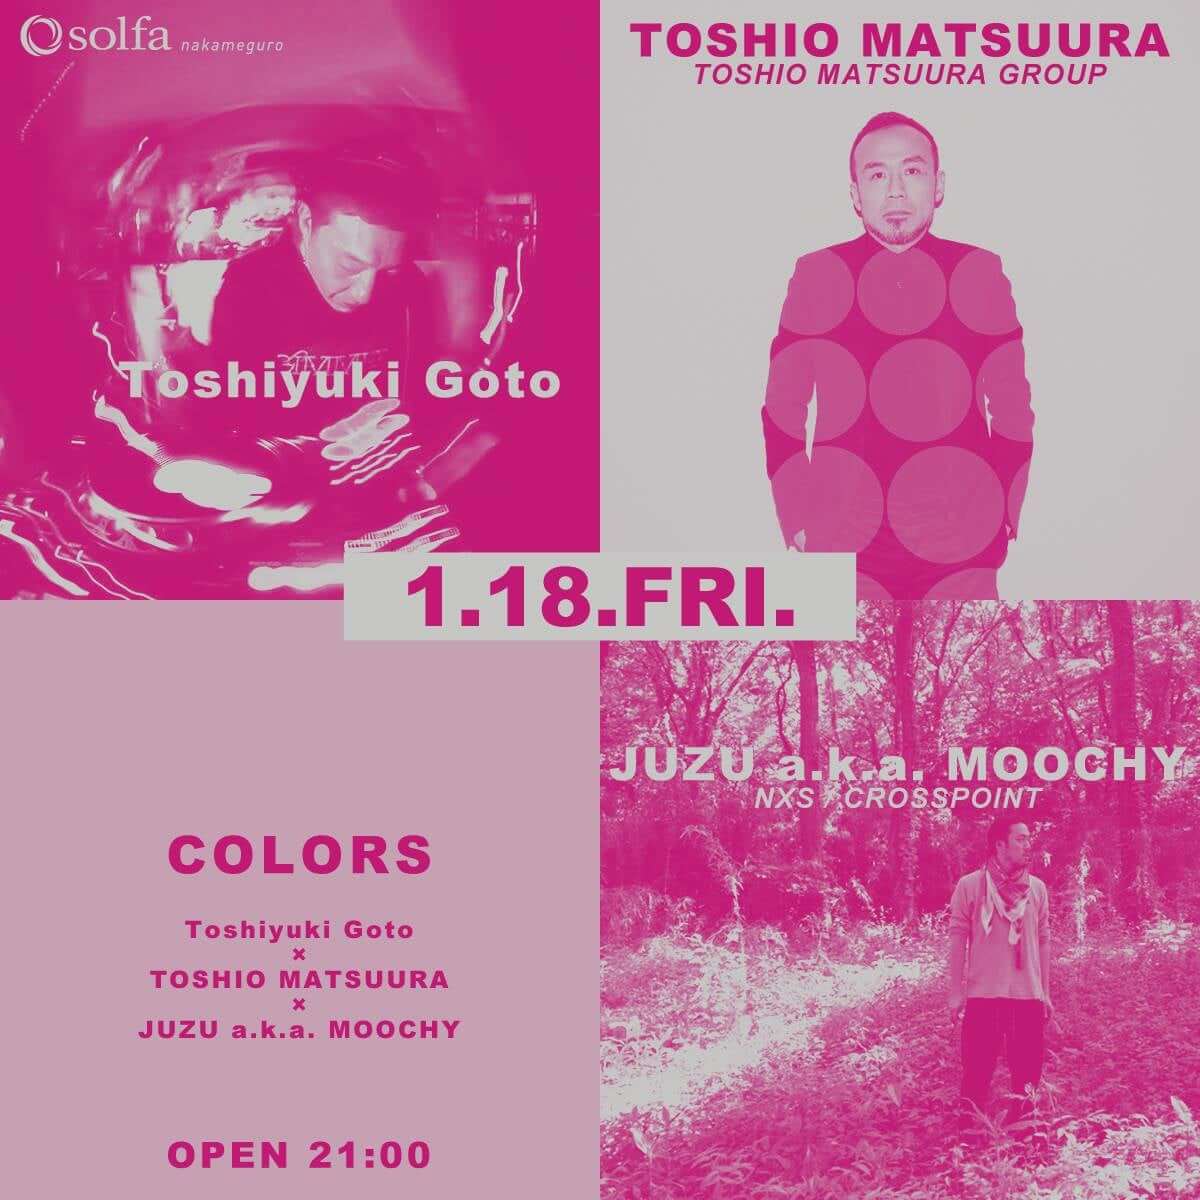 Toshiyuki Goto、TOSHIO MATSUURA、JUZU a.k.a. MOOCHYがパーティー「Colors」を中目黒solfaにて開催 music190116-solfa-colors-3-1200x1200